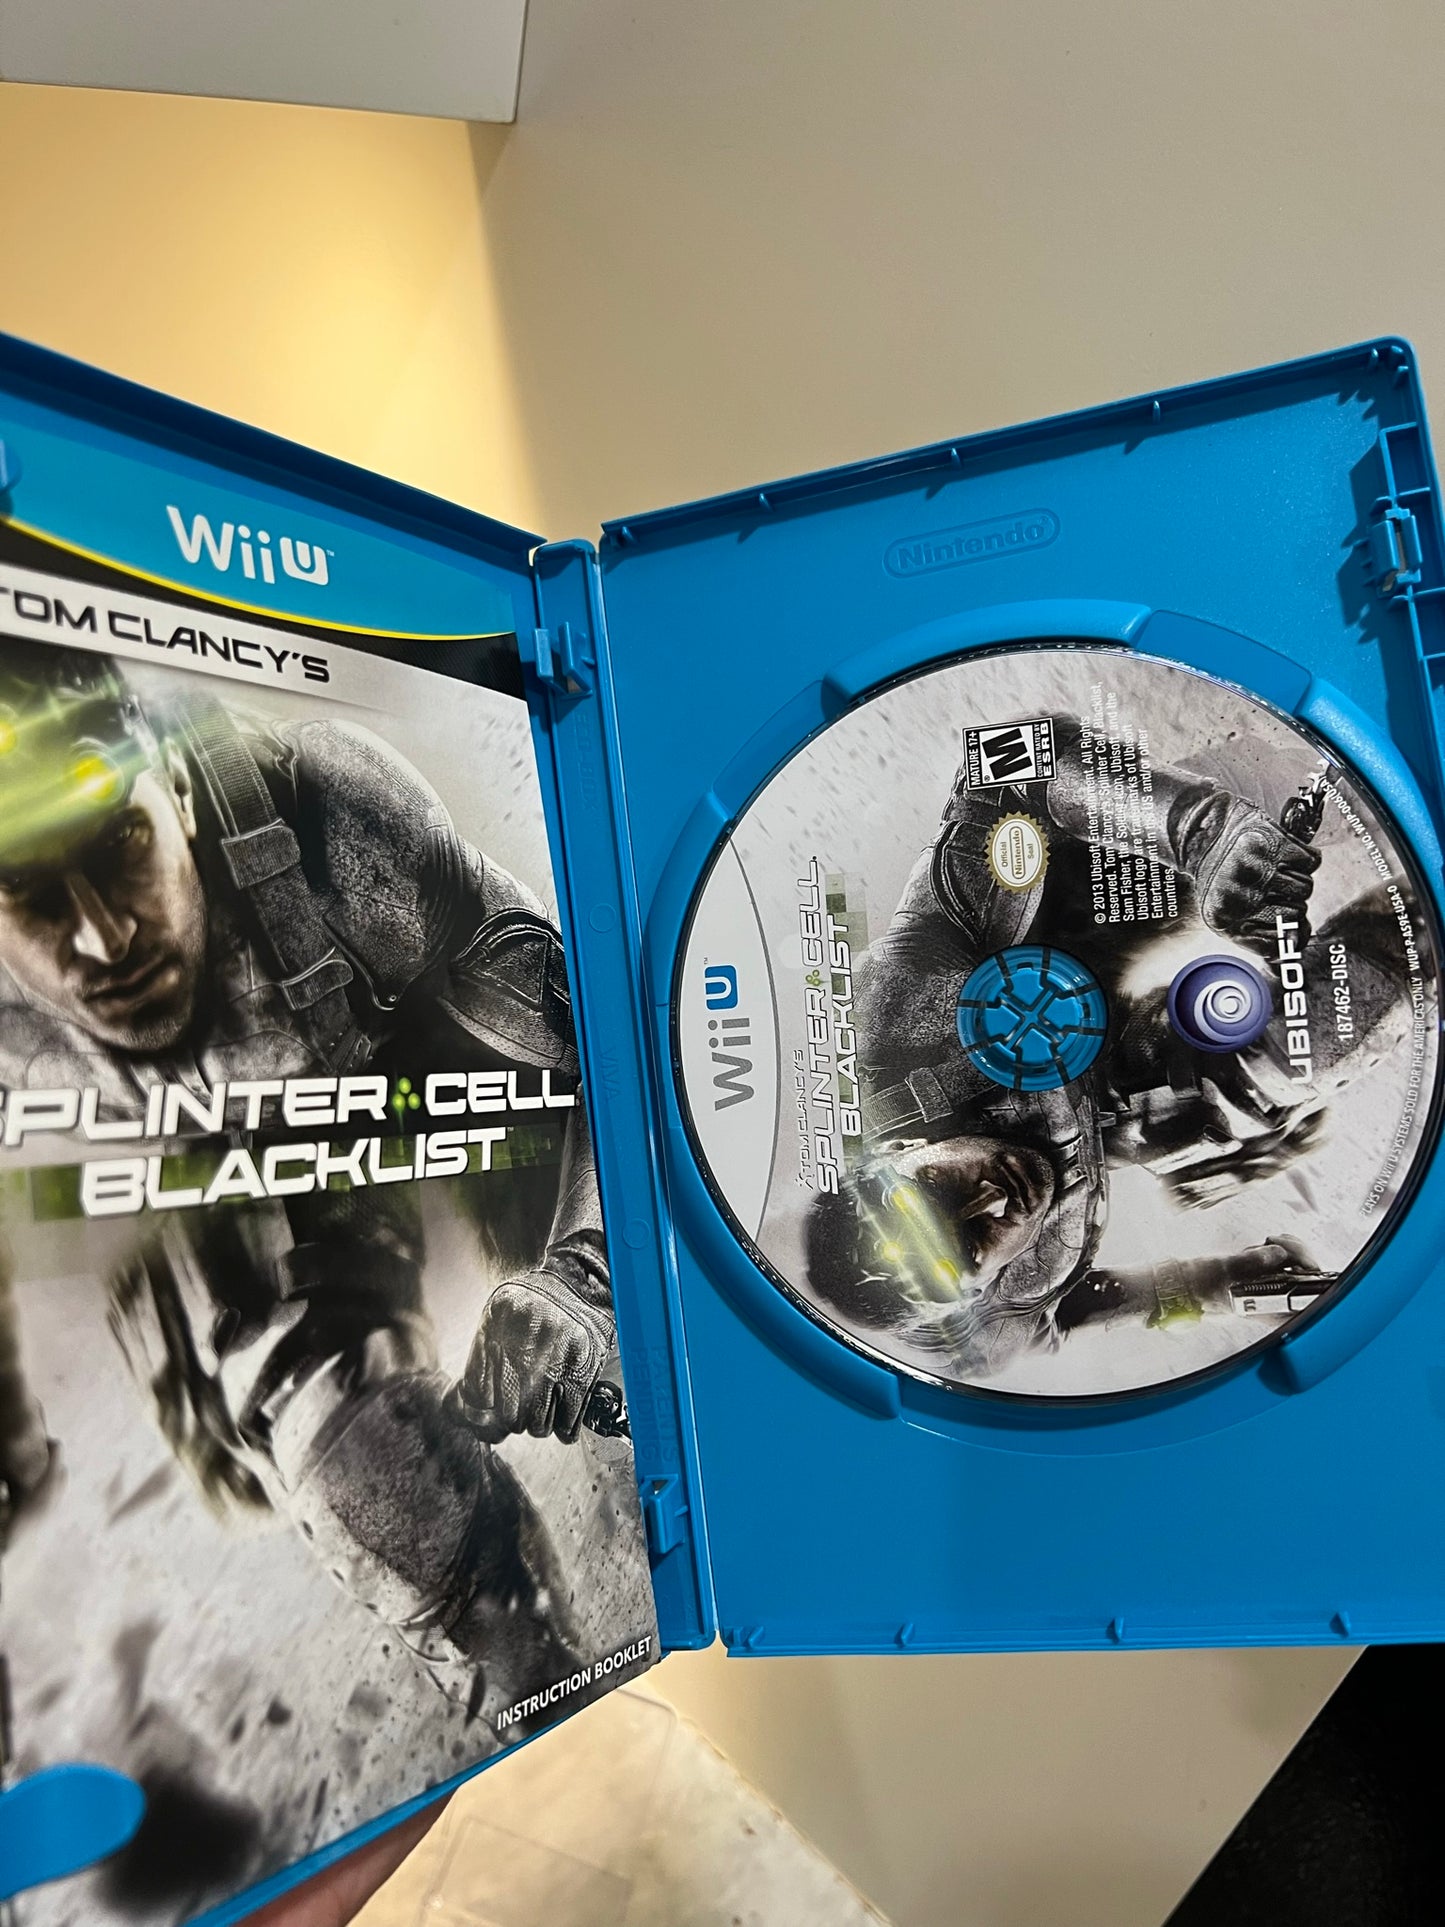 Tom Clancys Splinter Cell Blacklist (Nintendo Wii U, 2013)